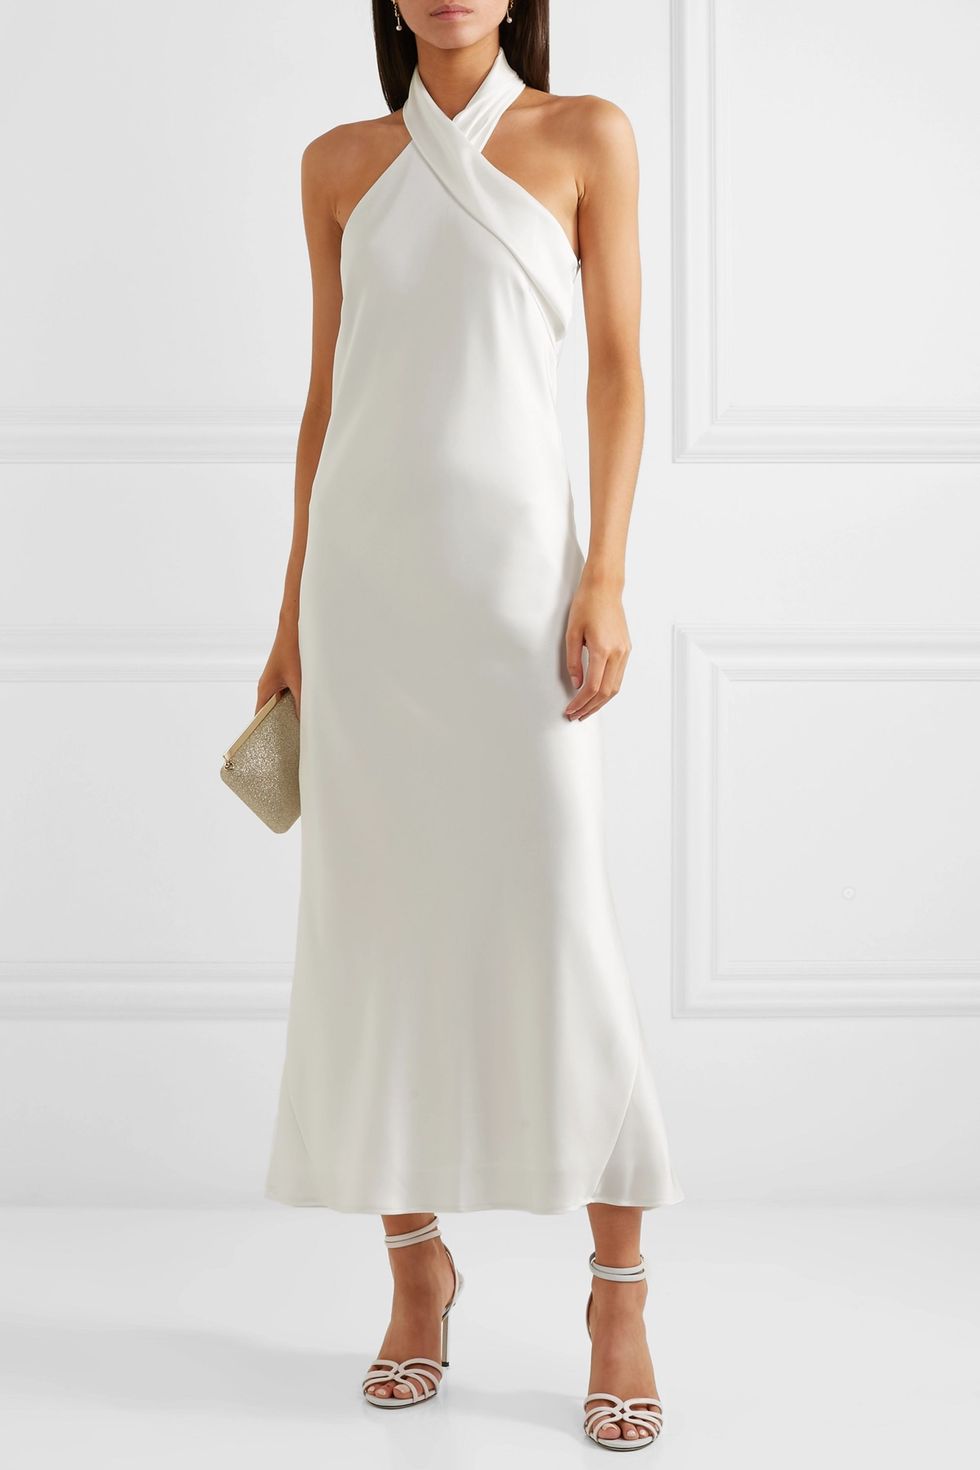 Modern Wedding Dresses Spring 2023 - Bridal Gown Inspiration